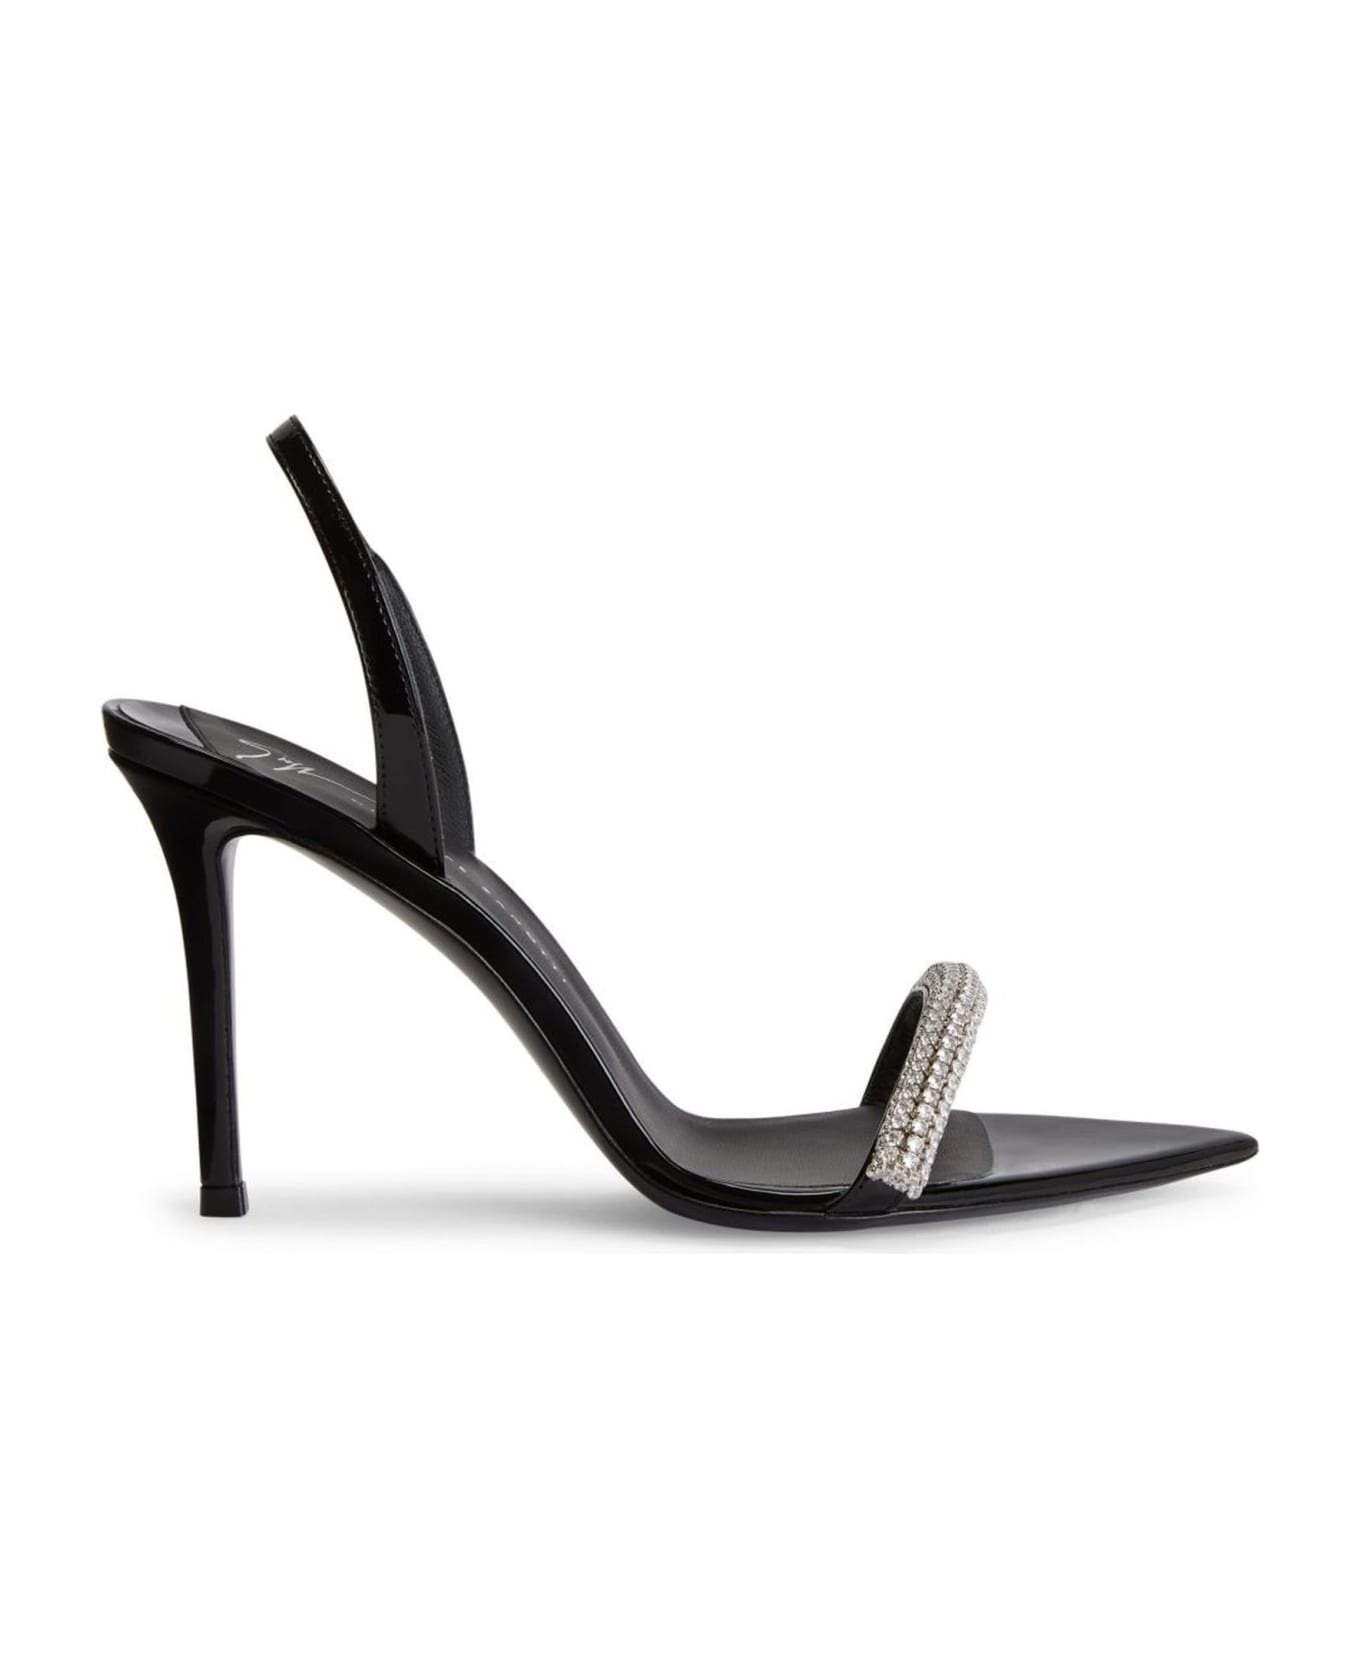 Giuseppe Zanotti Black Patent Leather Slingback Sandals - Black サンダル